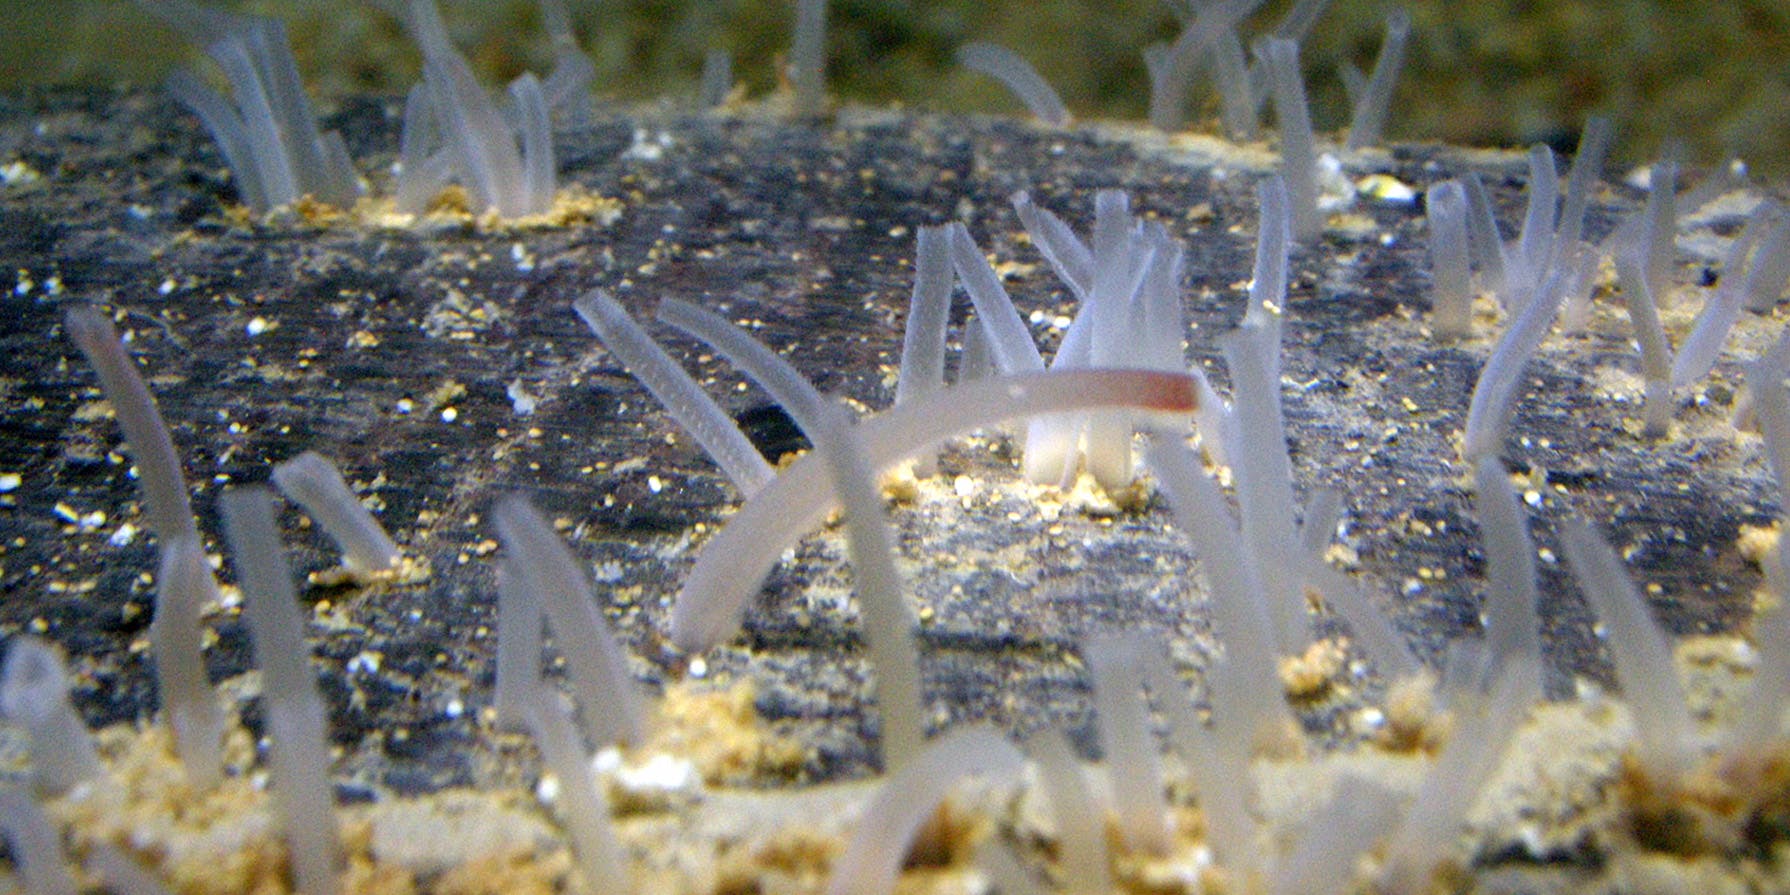 Close-up image of small blue-ish, purple-ish tubes underwater